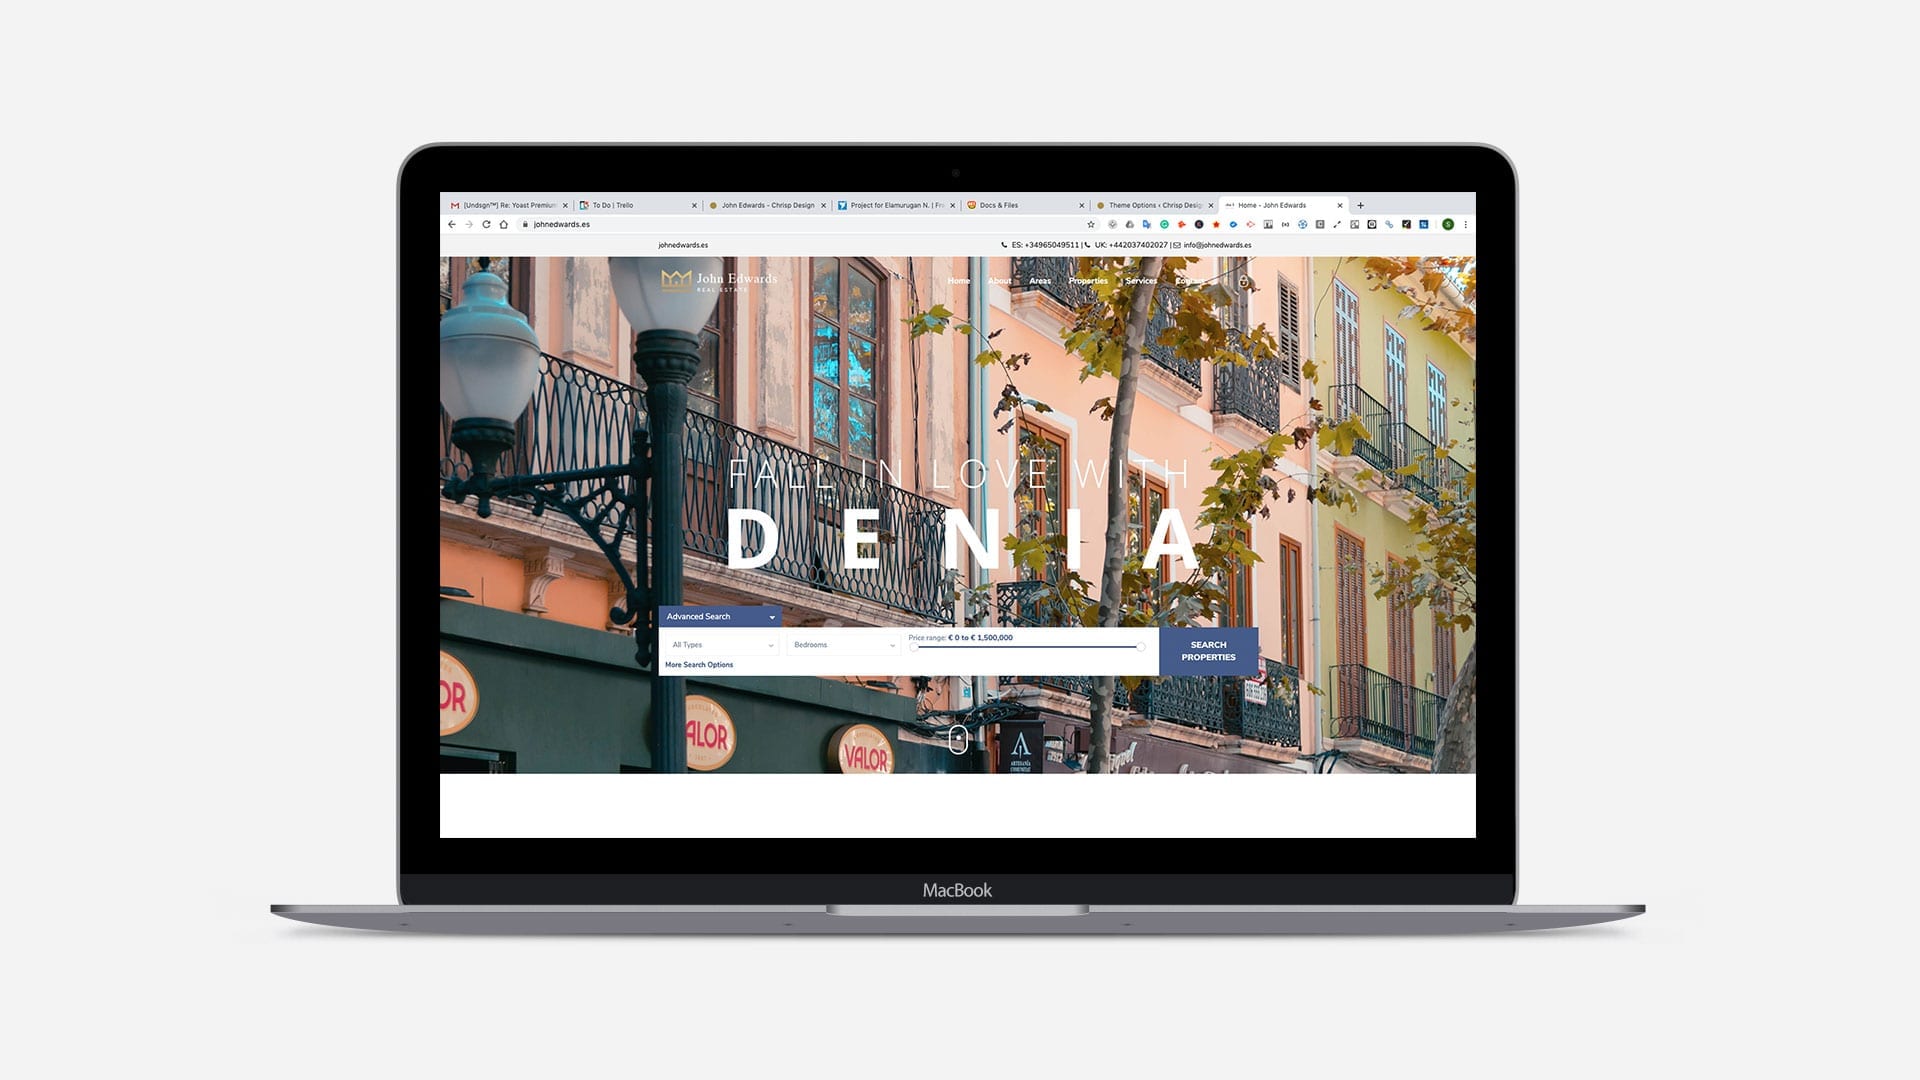 macbook view of website denia